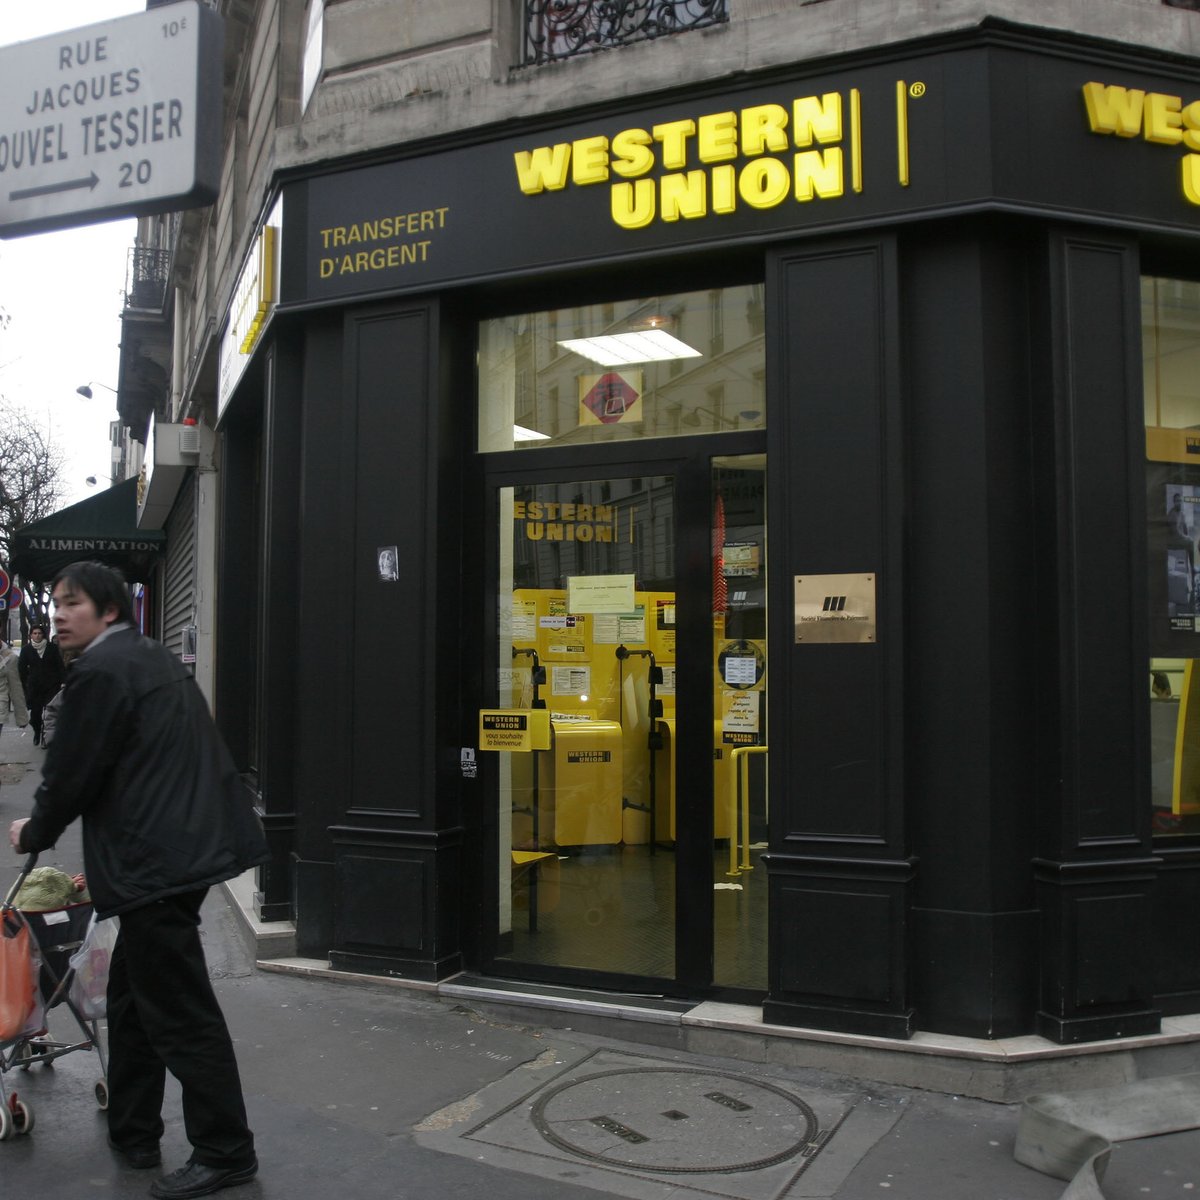 Western Union brings its reliability, reach to US Walmart